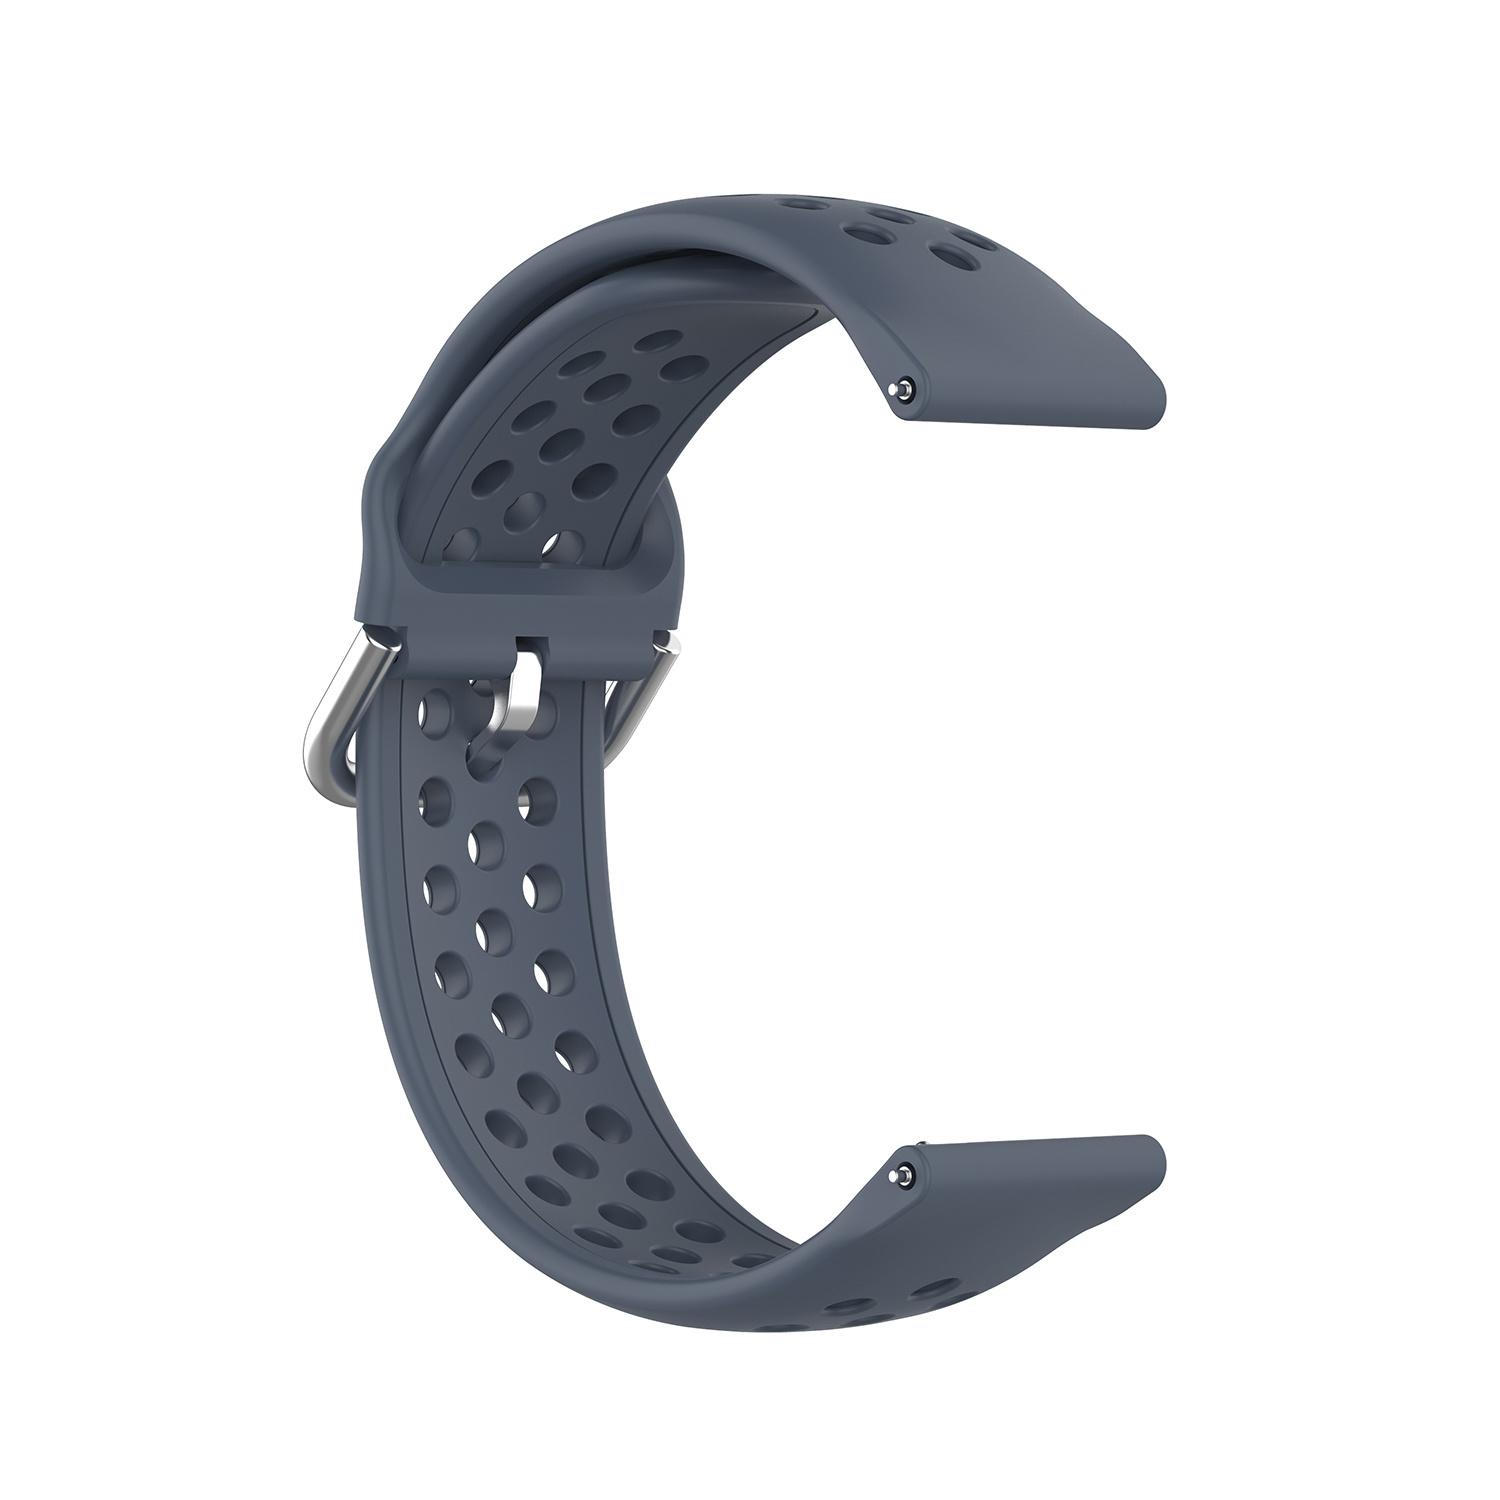 Cinturino doppia fibbia per Samsung Galaxy Watch - grigio